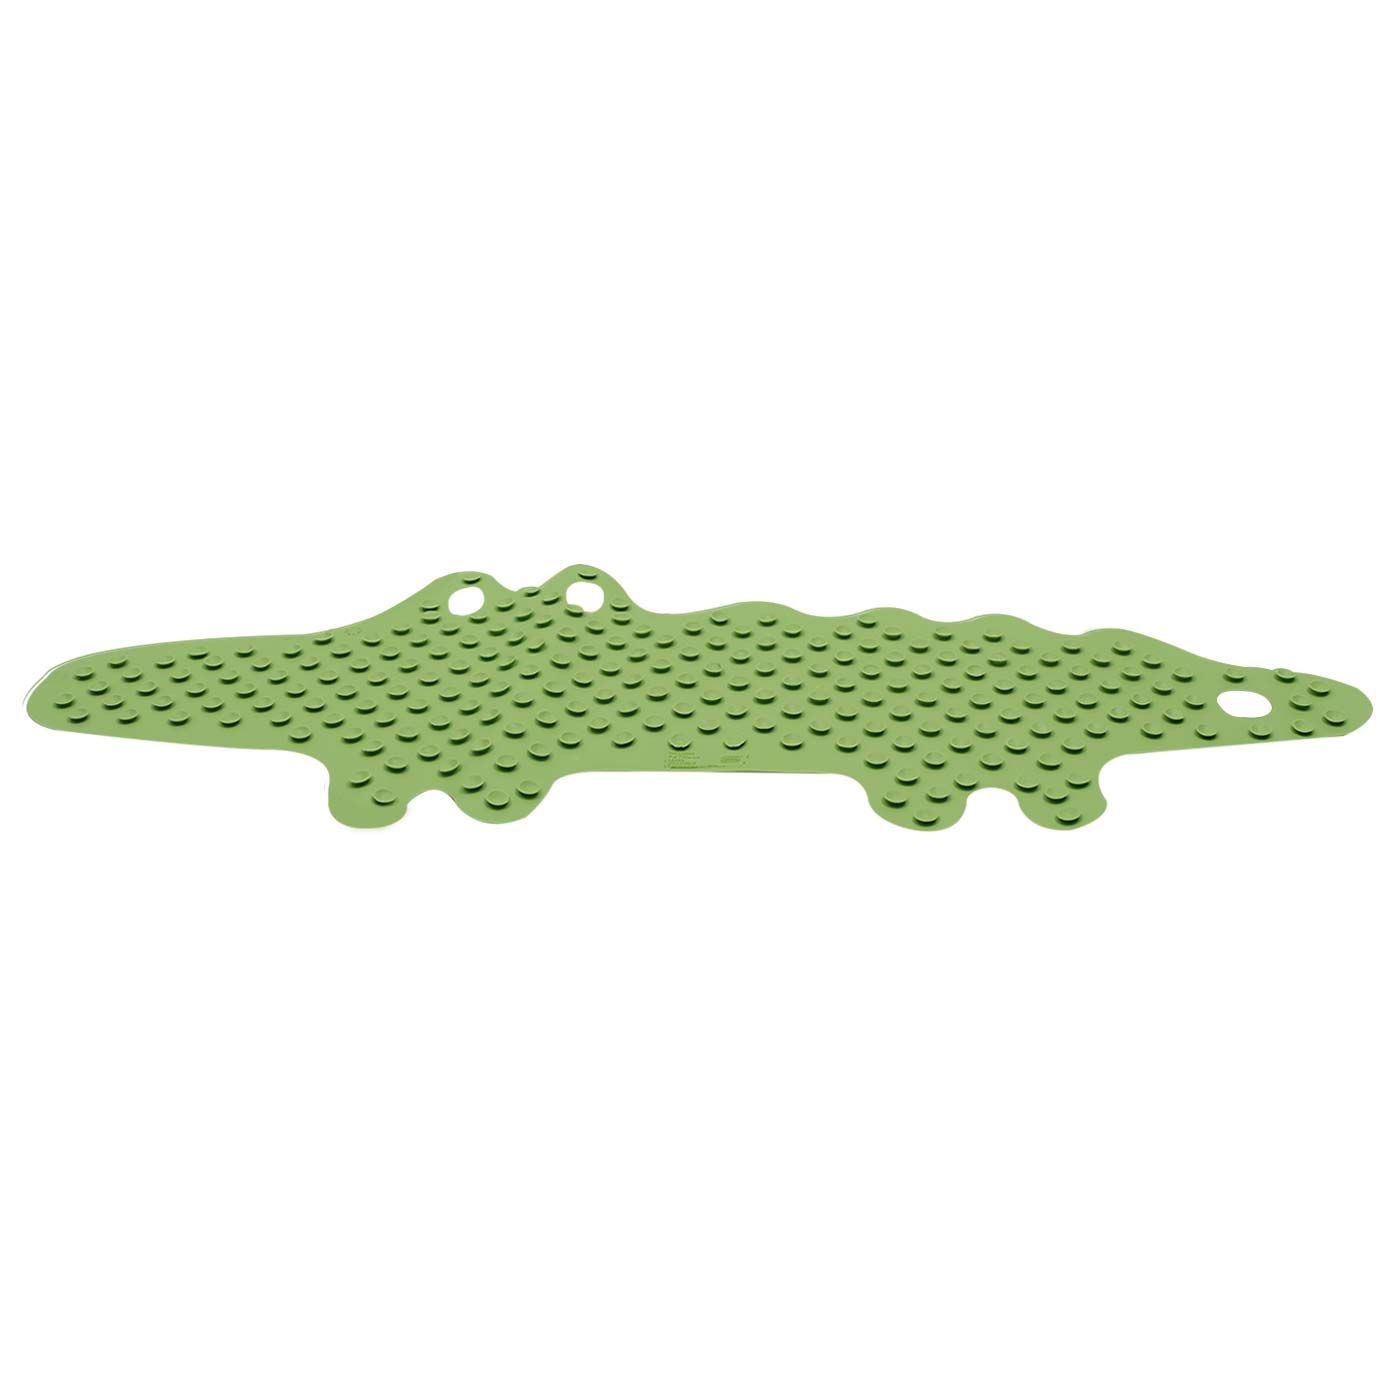 IKEA Patrull Bathtub Mat Green Crocodile - 2